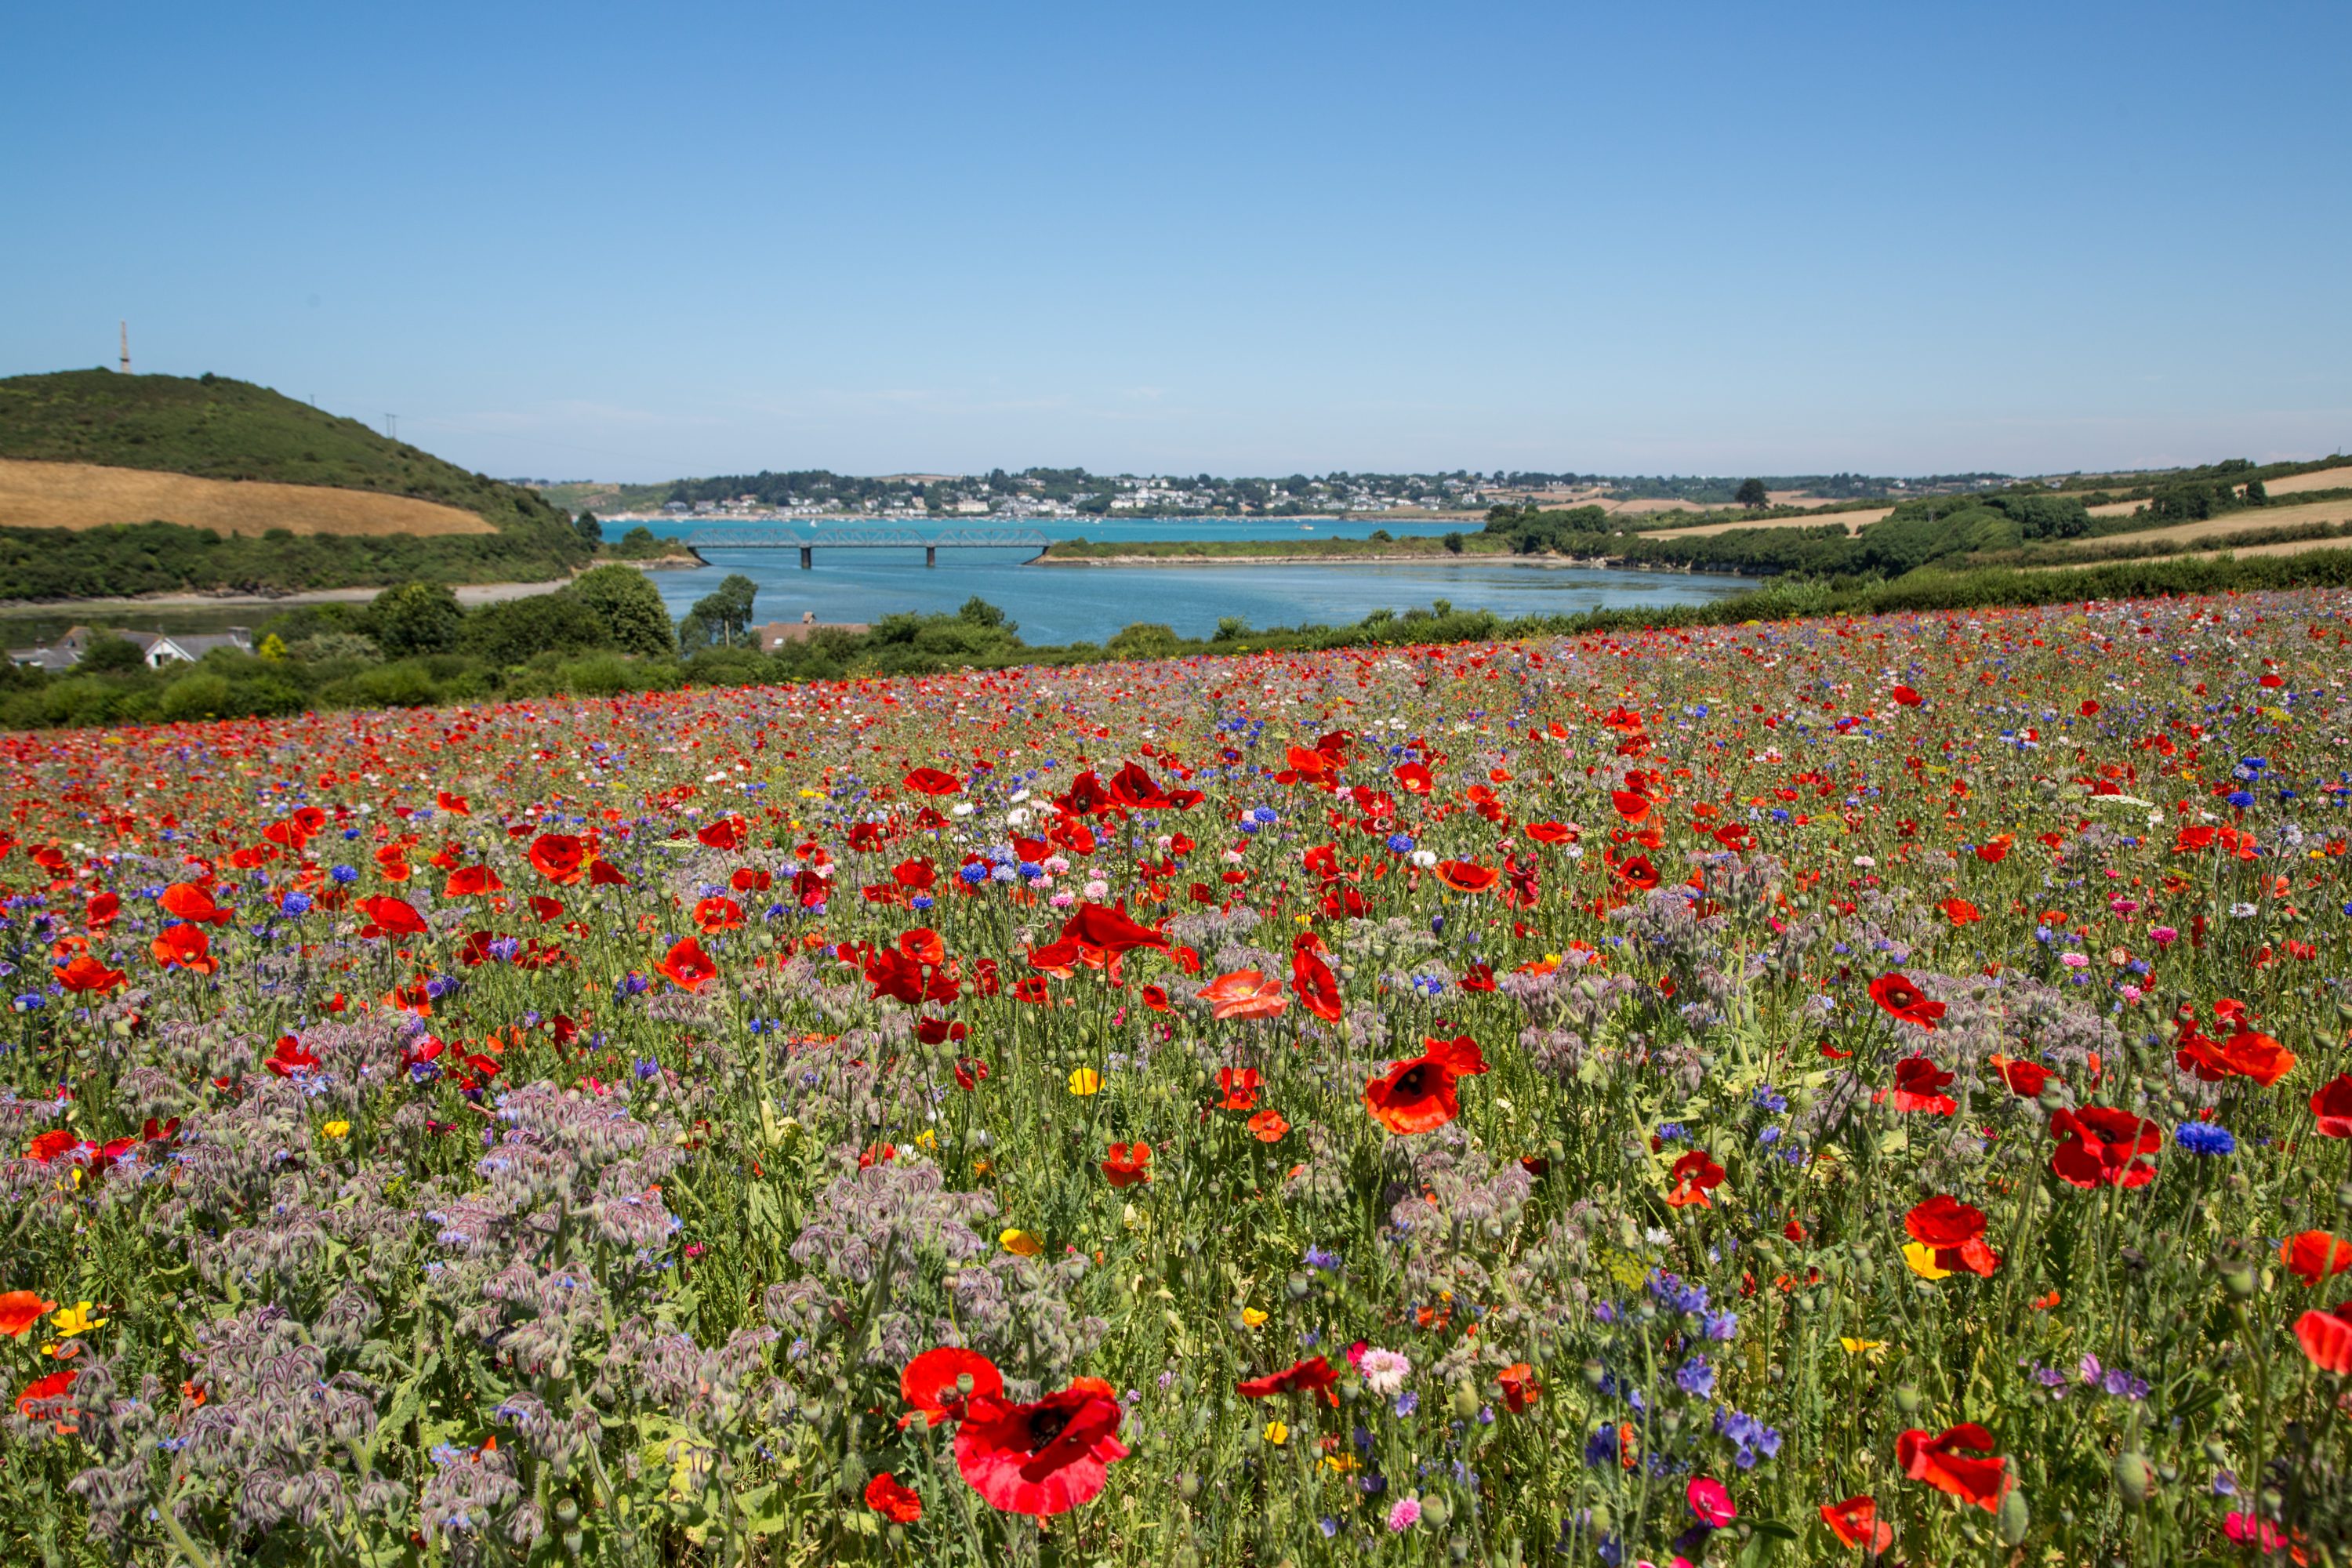 A field of poppies overlooking the iron bridge